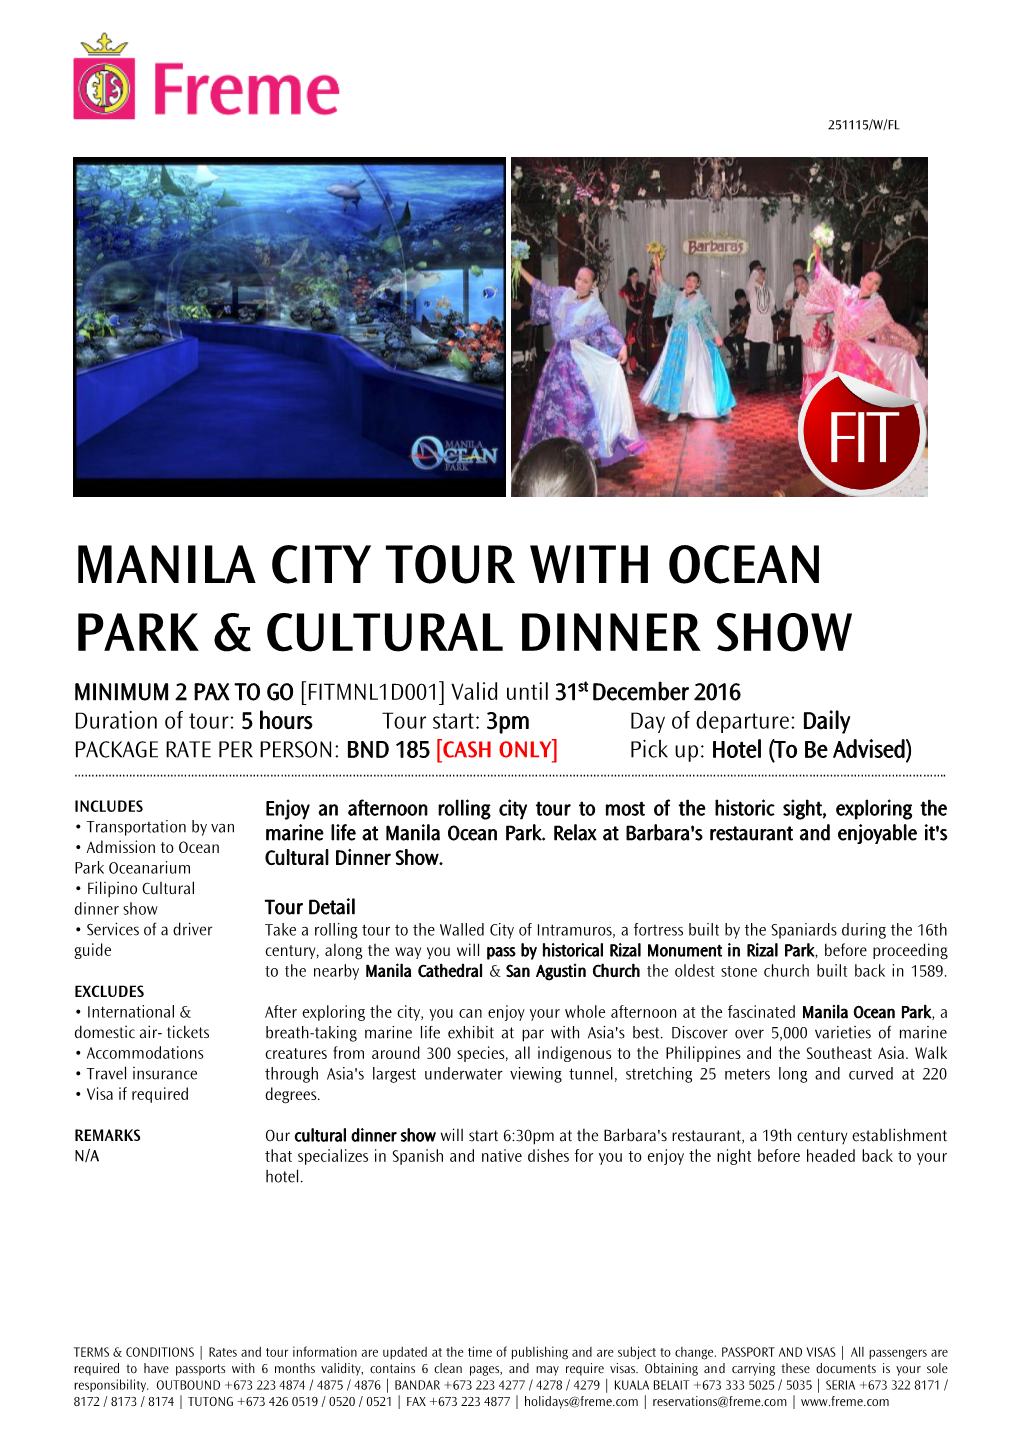 Manila City Tour with Ocean Park & Cultural Dinner Show